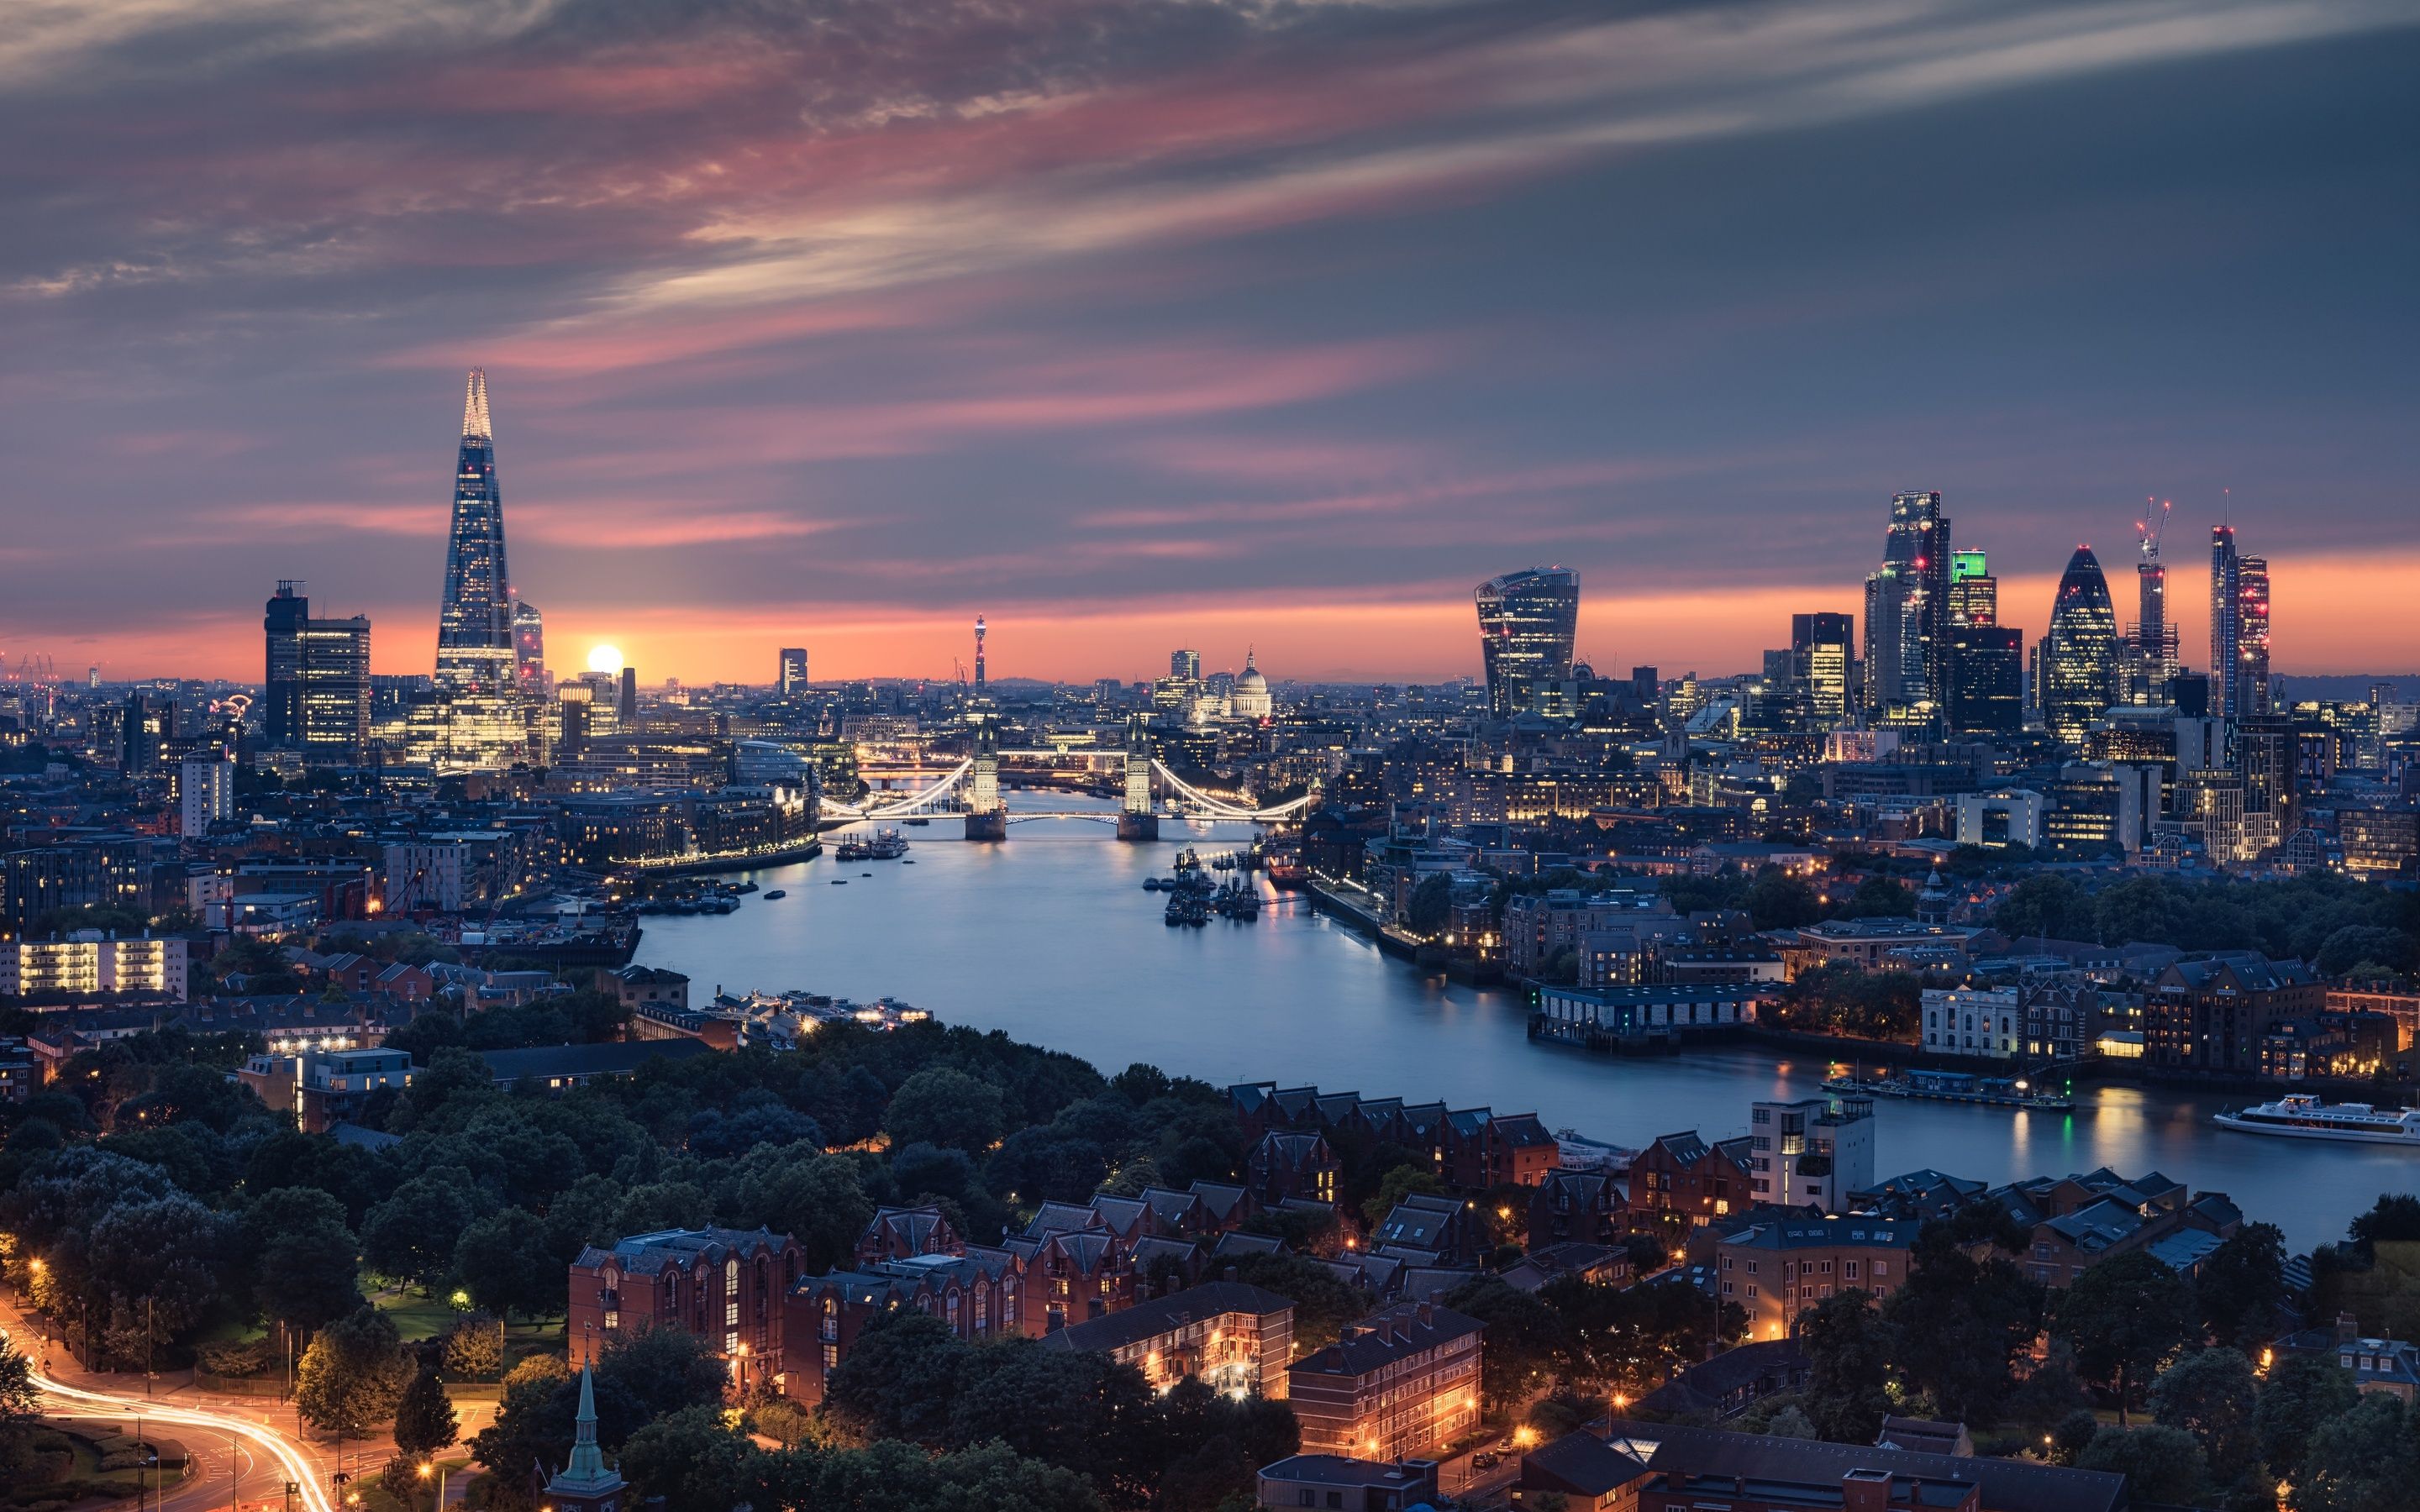 Beautiful London City View 8k Macbook Pro Retina HD 4k Wallpaper, Image, Background, Photo and Picture